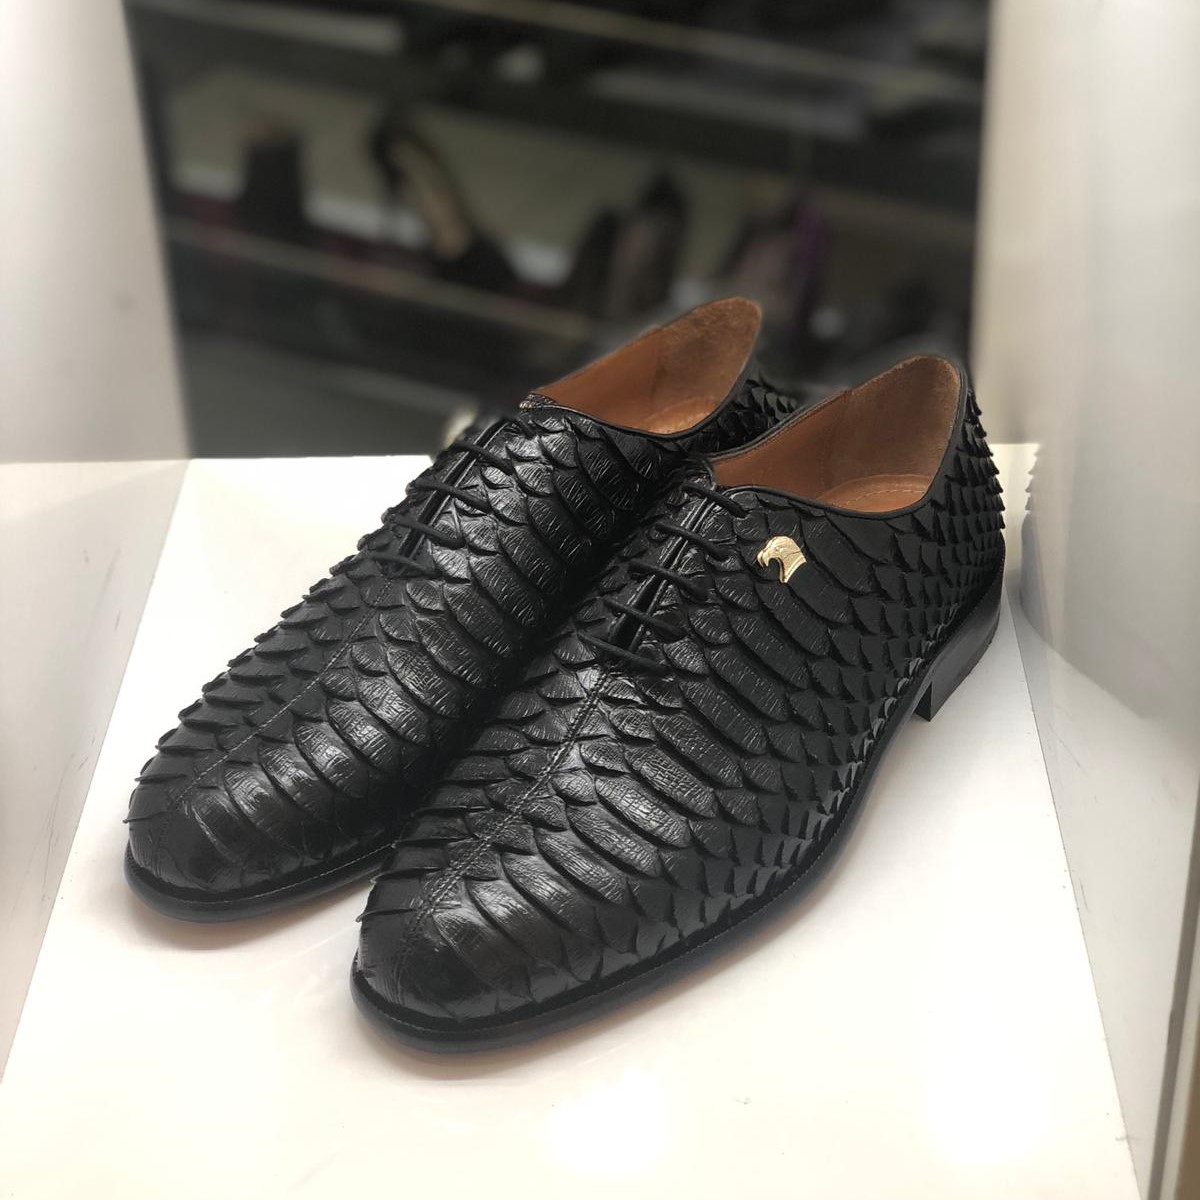 SR Python Dress Shoes - Leather Guys